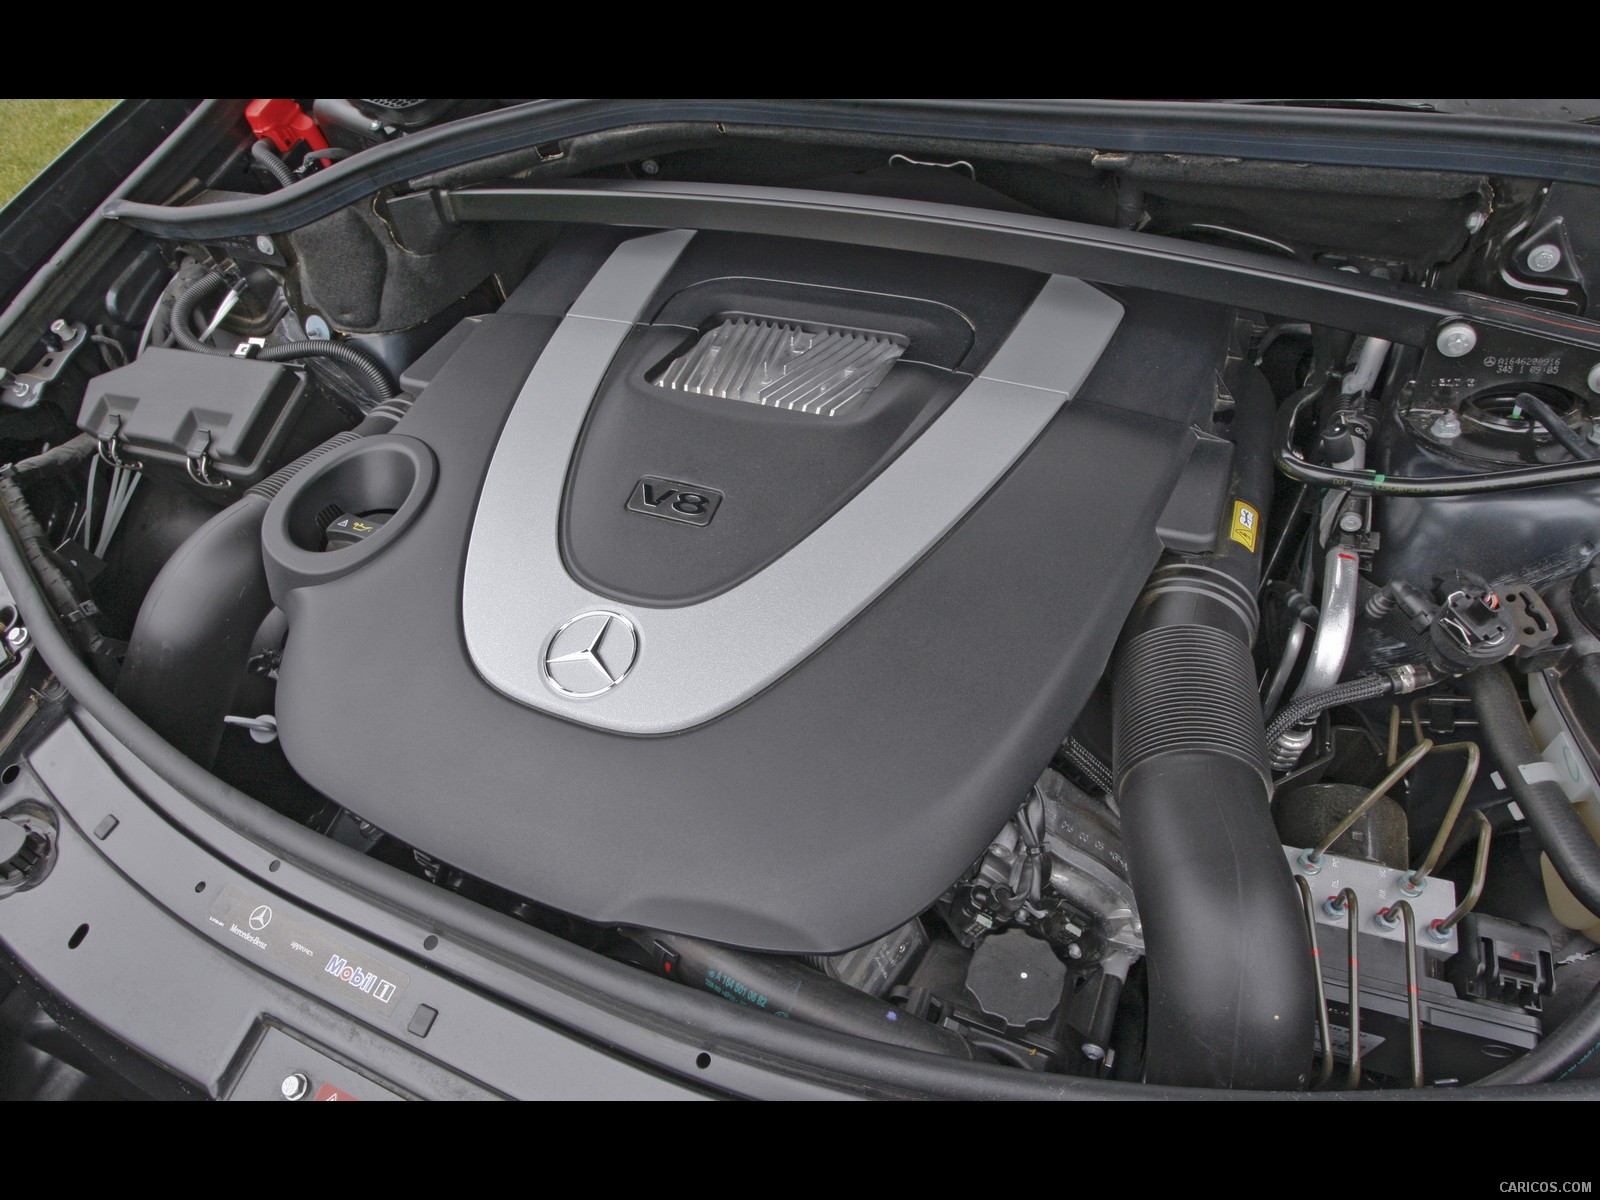 2010 Mercedes-Benz GL550 - Engine, #69 of 112